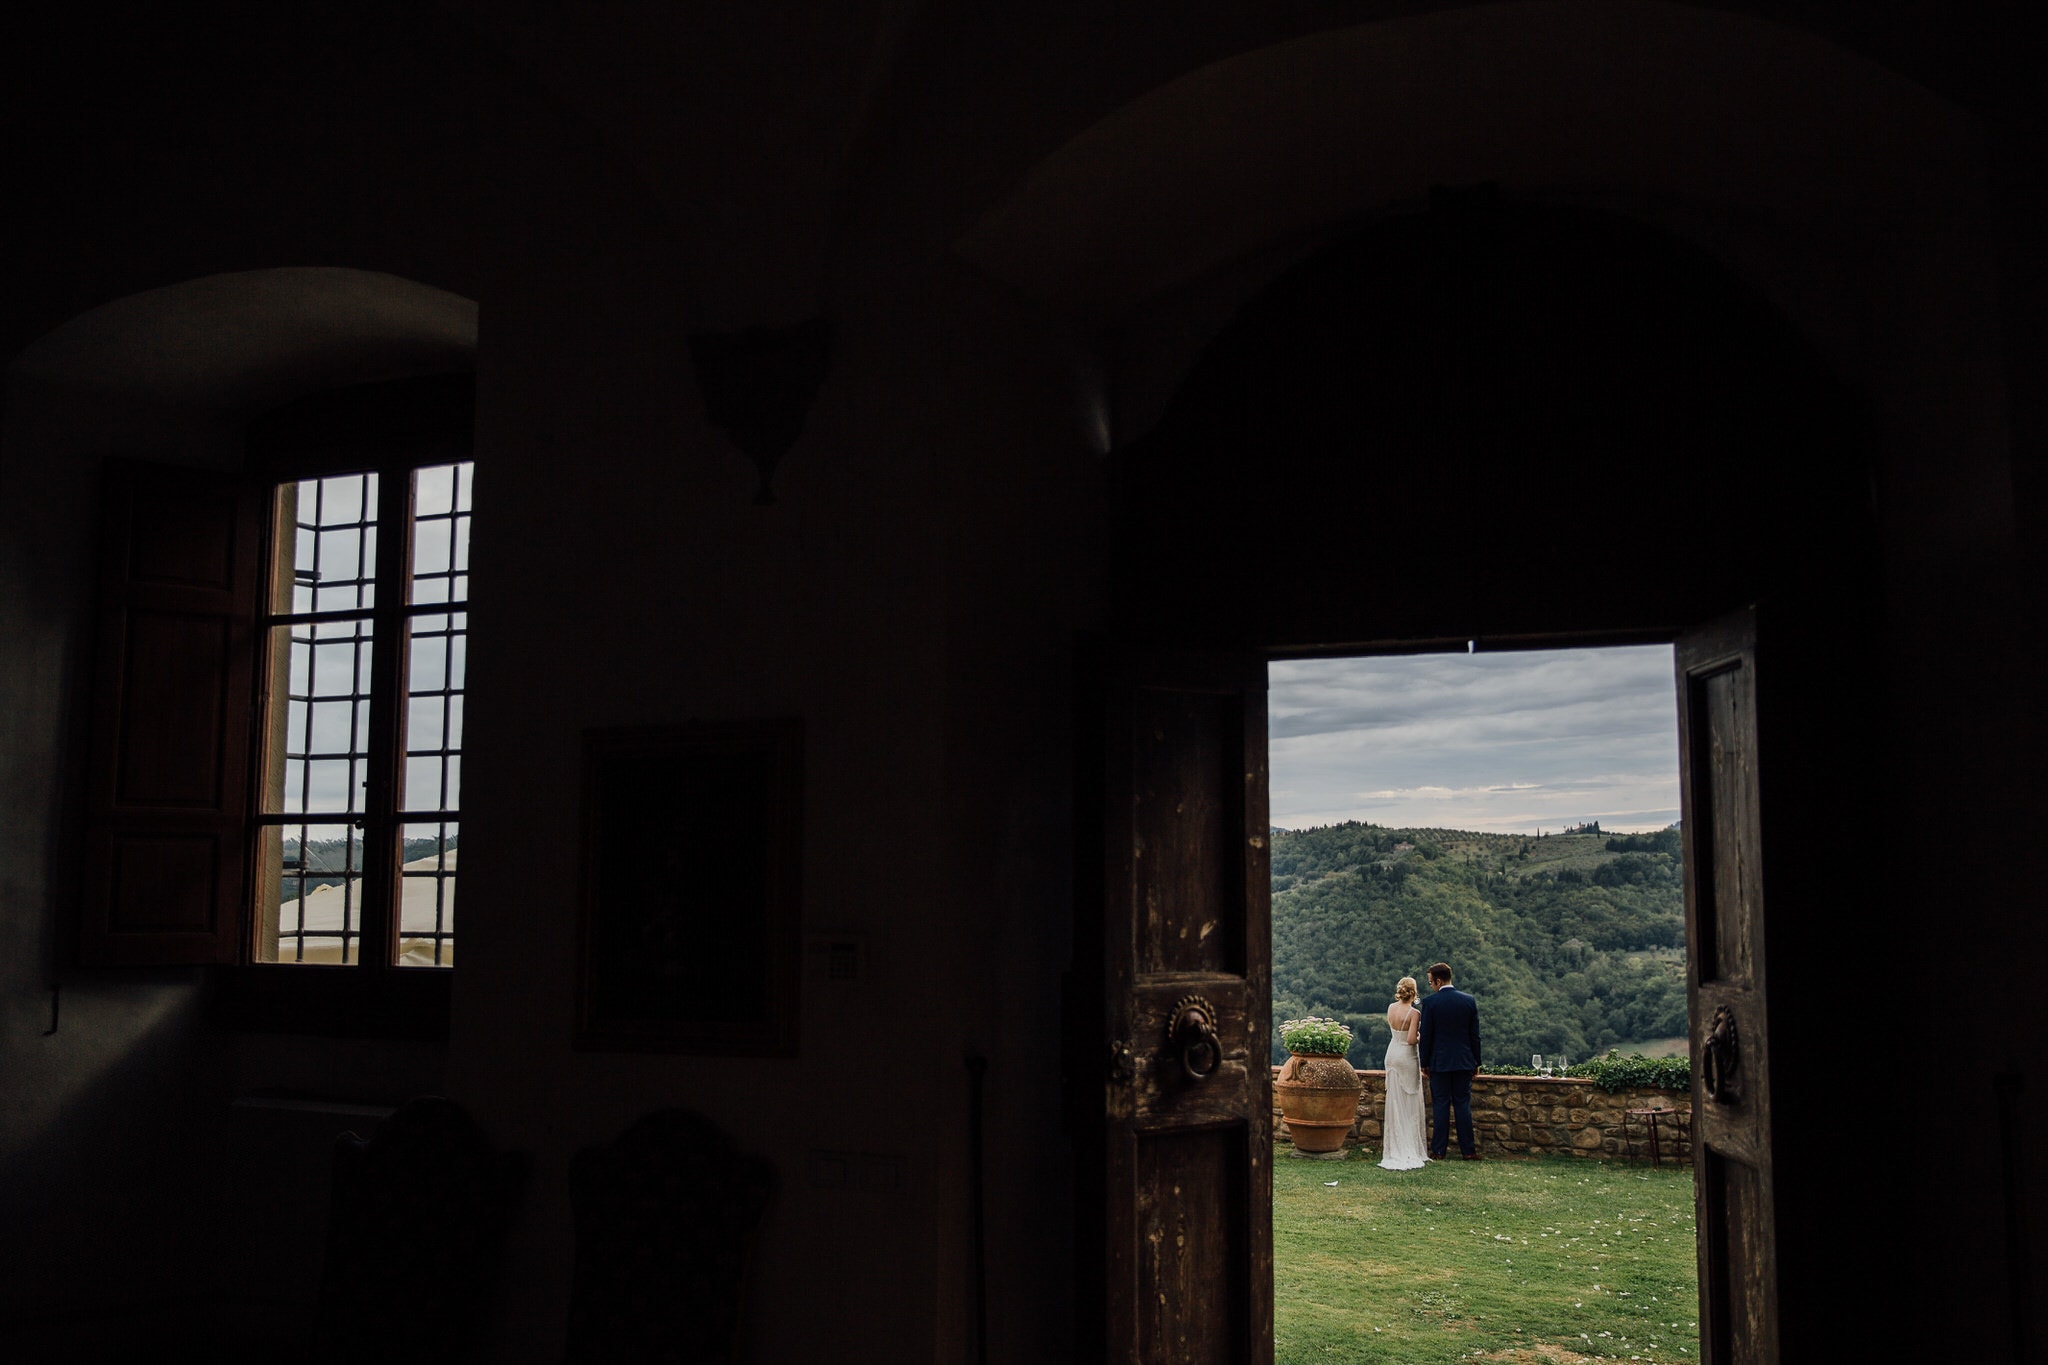 shot through doorway framing bride and groom looking at view of Tuscan hills